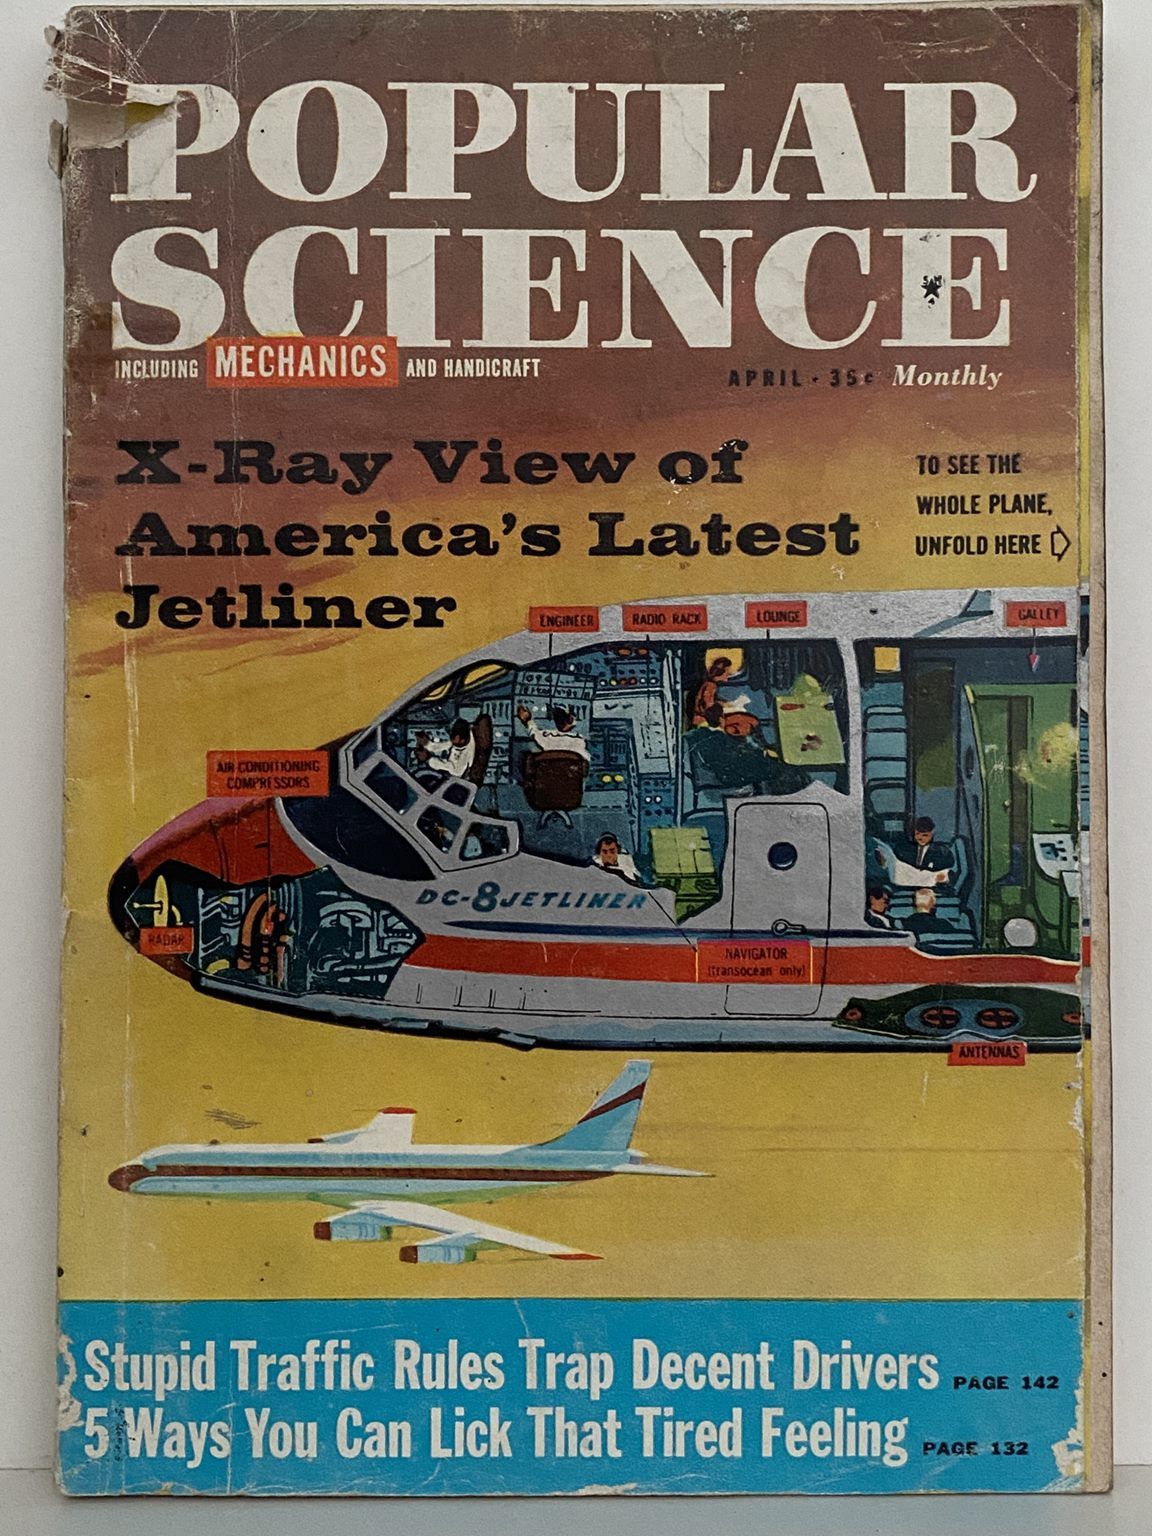 VINTAGE MAGAZINE: Popular Science, Vol. 174, No. 4 - April 1959